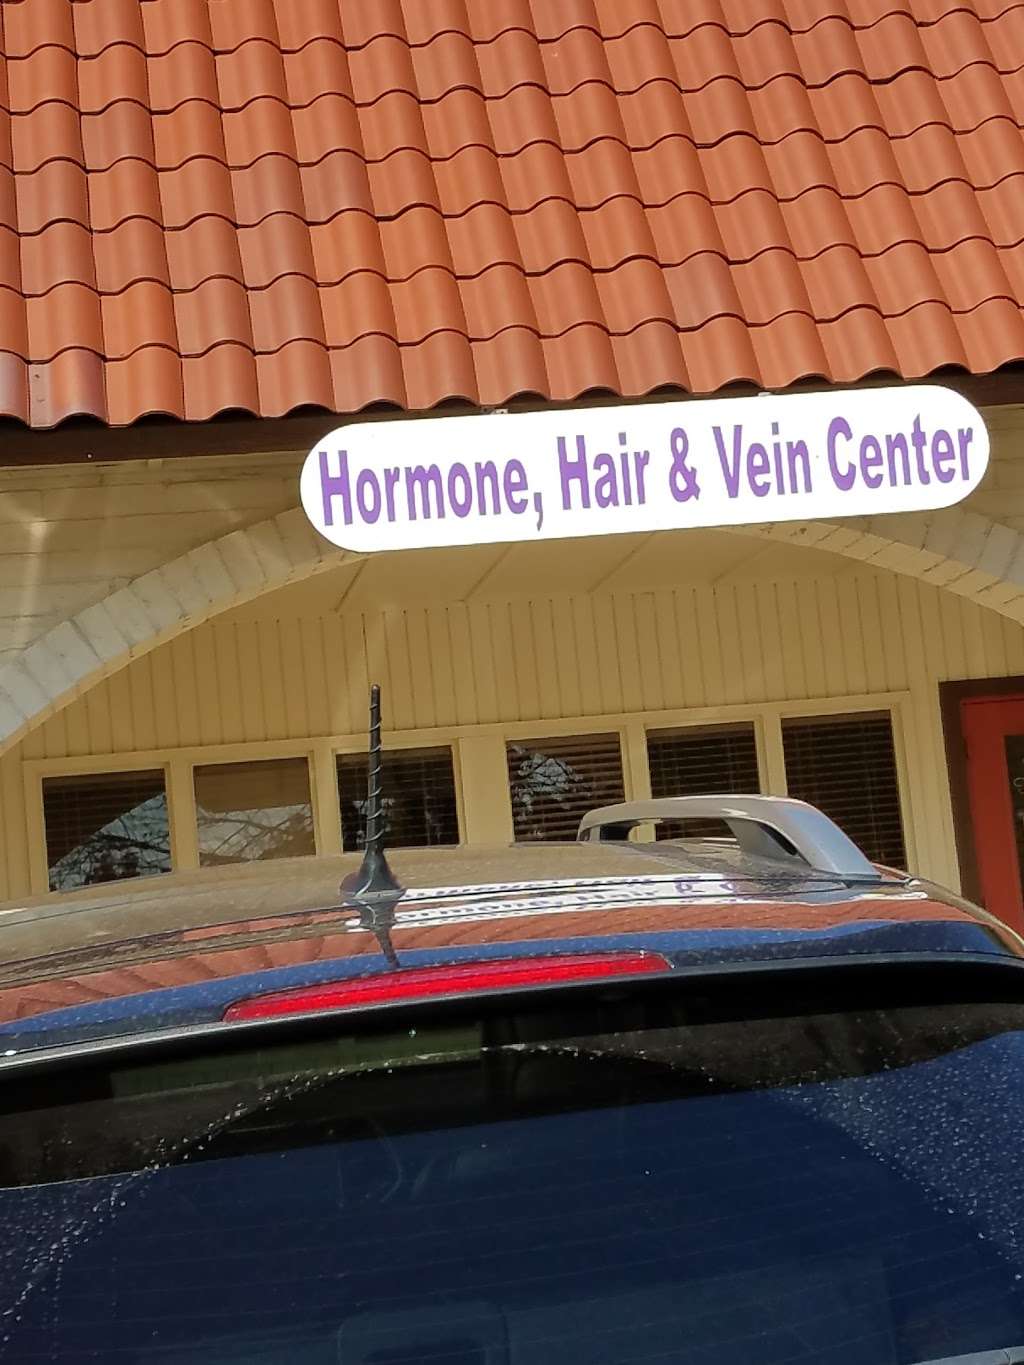 Hormone Hair & Vein Center: Richardson Marilyn R MD | 12616 W 62nd Terrace #112, Shawnee, KS 66216, USA | Phone: (913) 631-0277